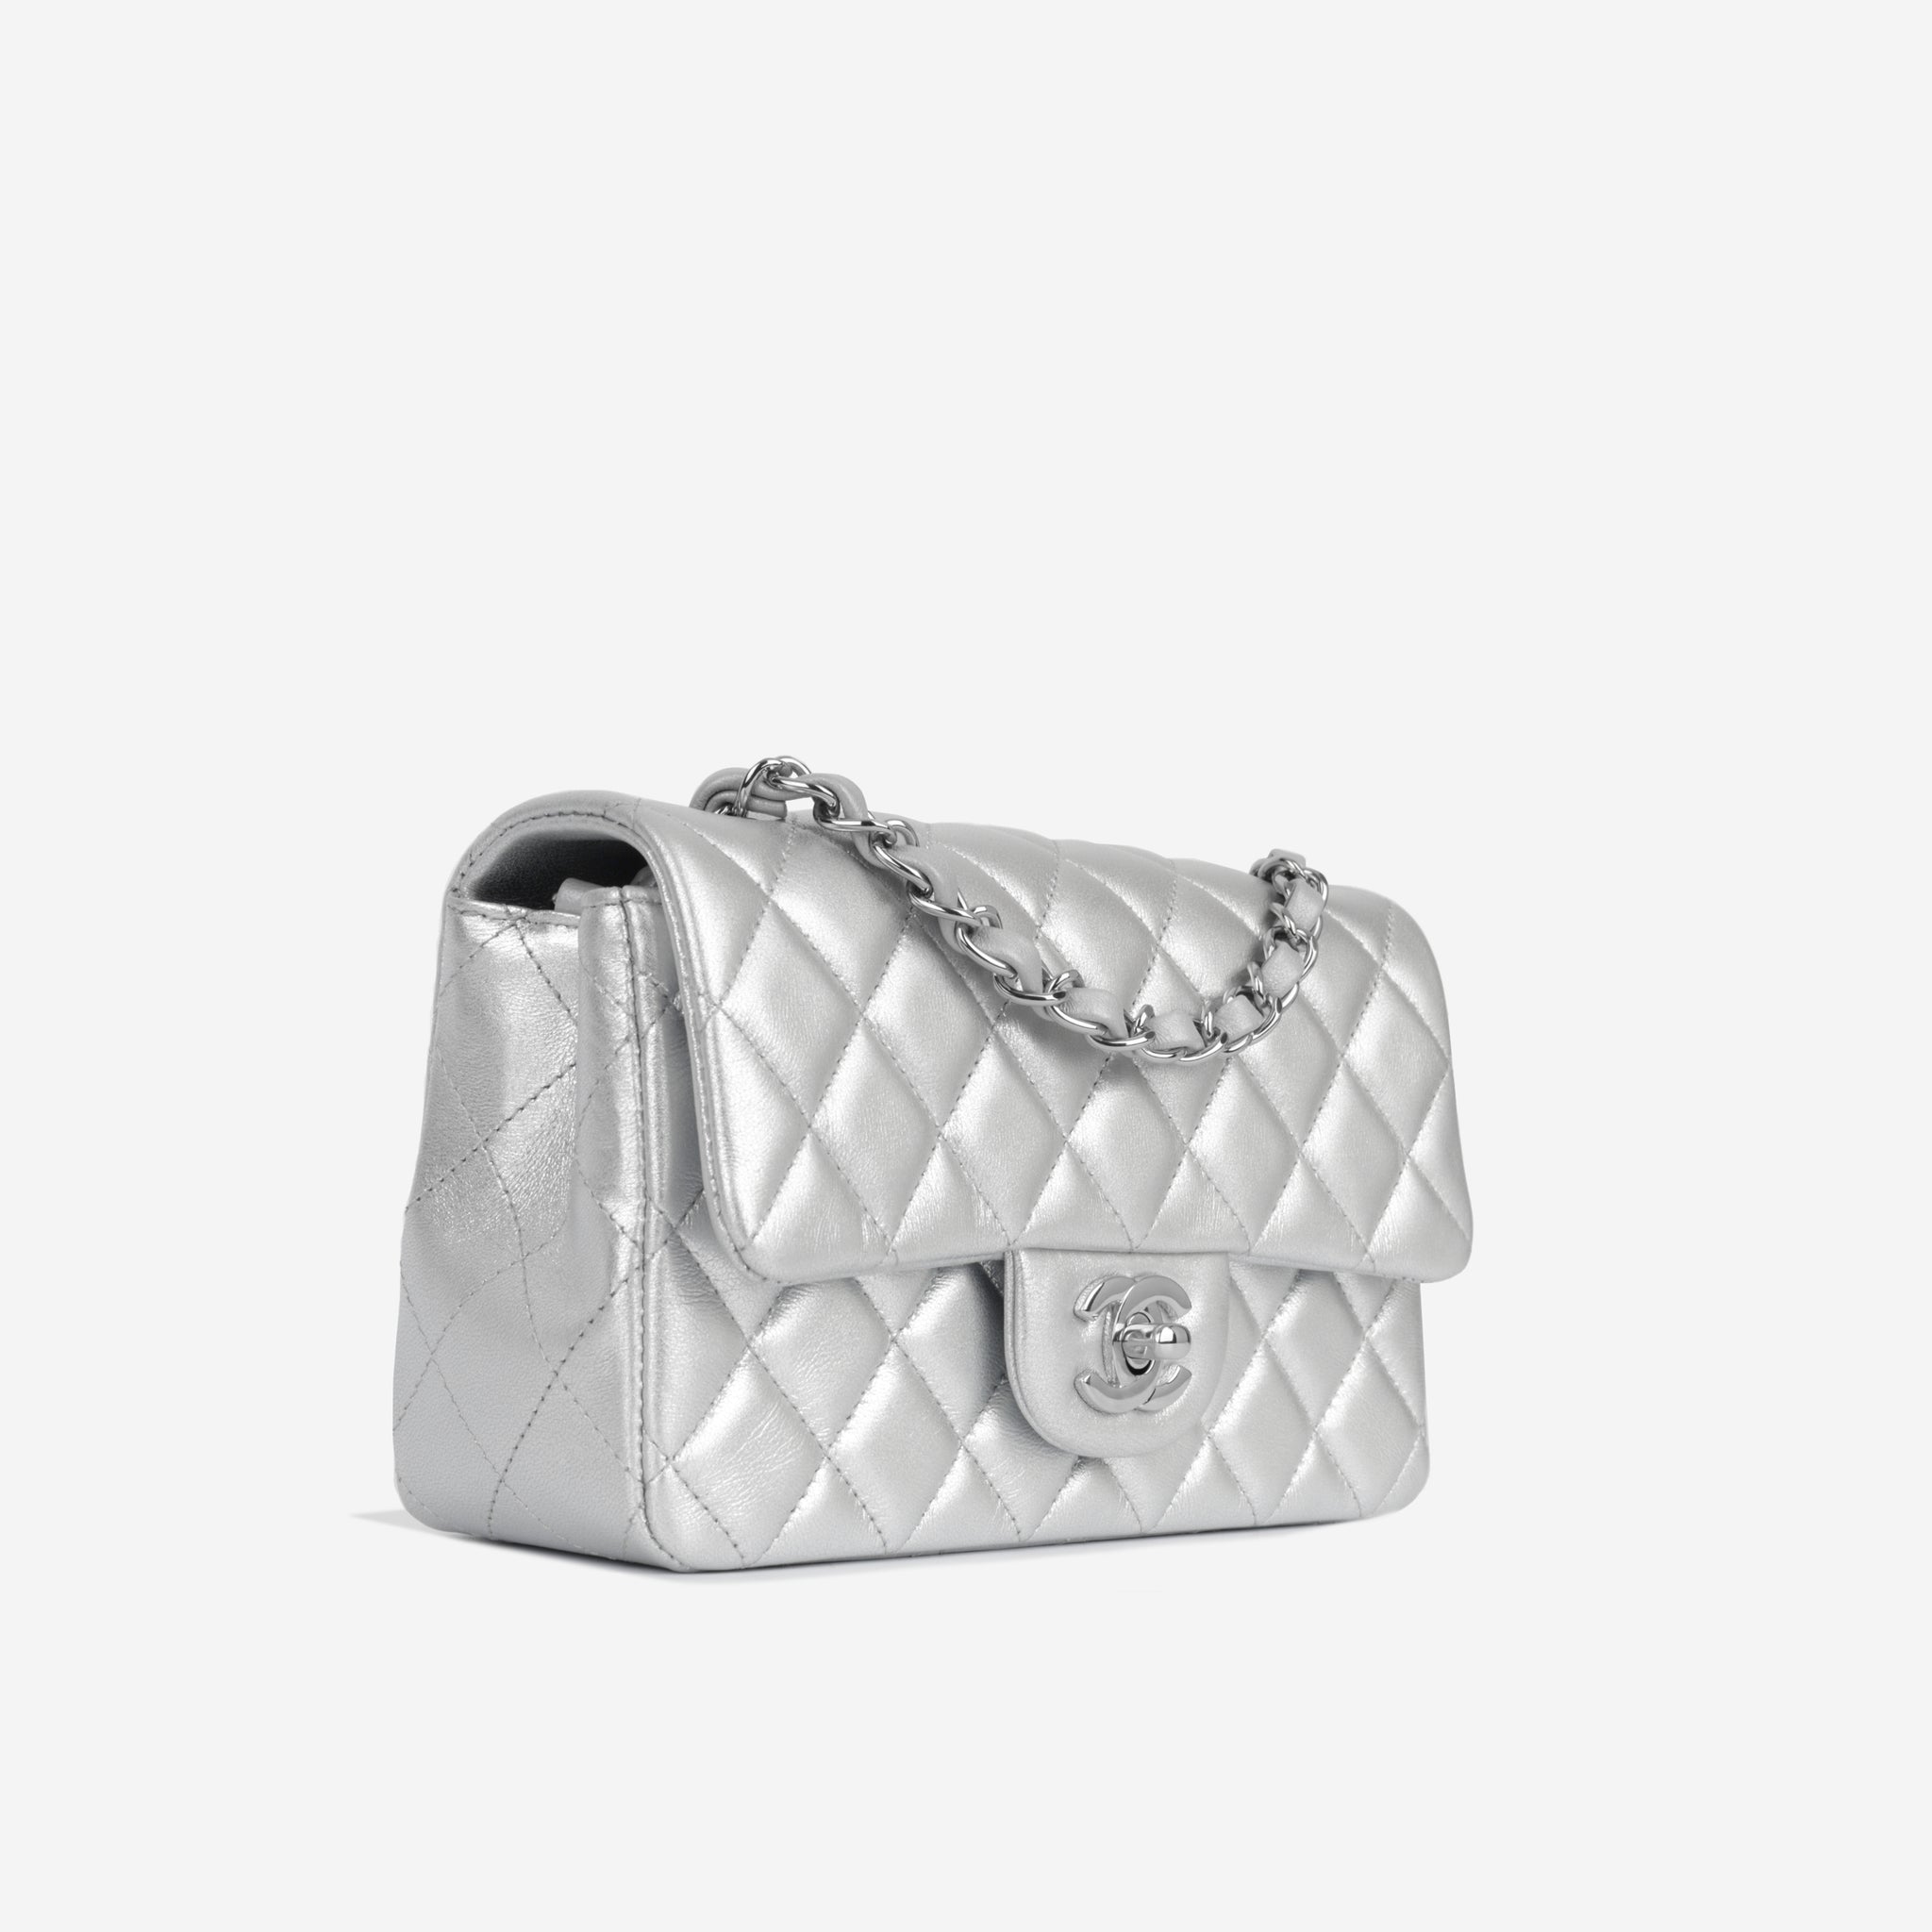 Chanel - Classic Flap Bag - Mini Rectangular - Silver Metallic Lambskin -  SHW - Immaculate